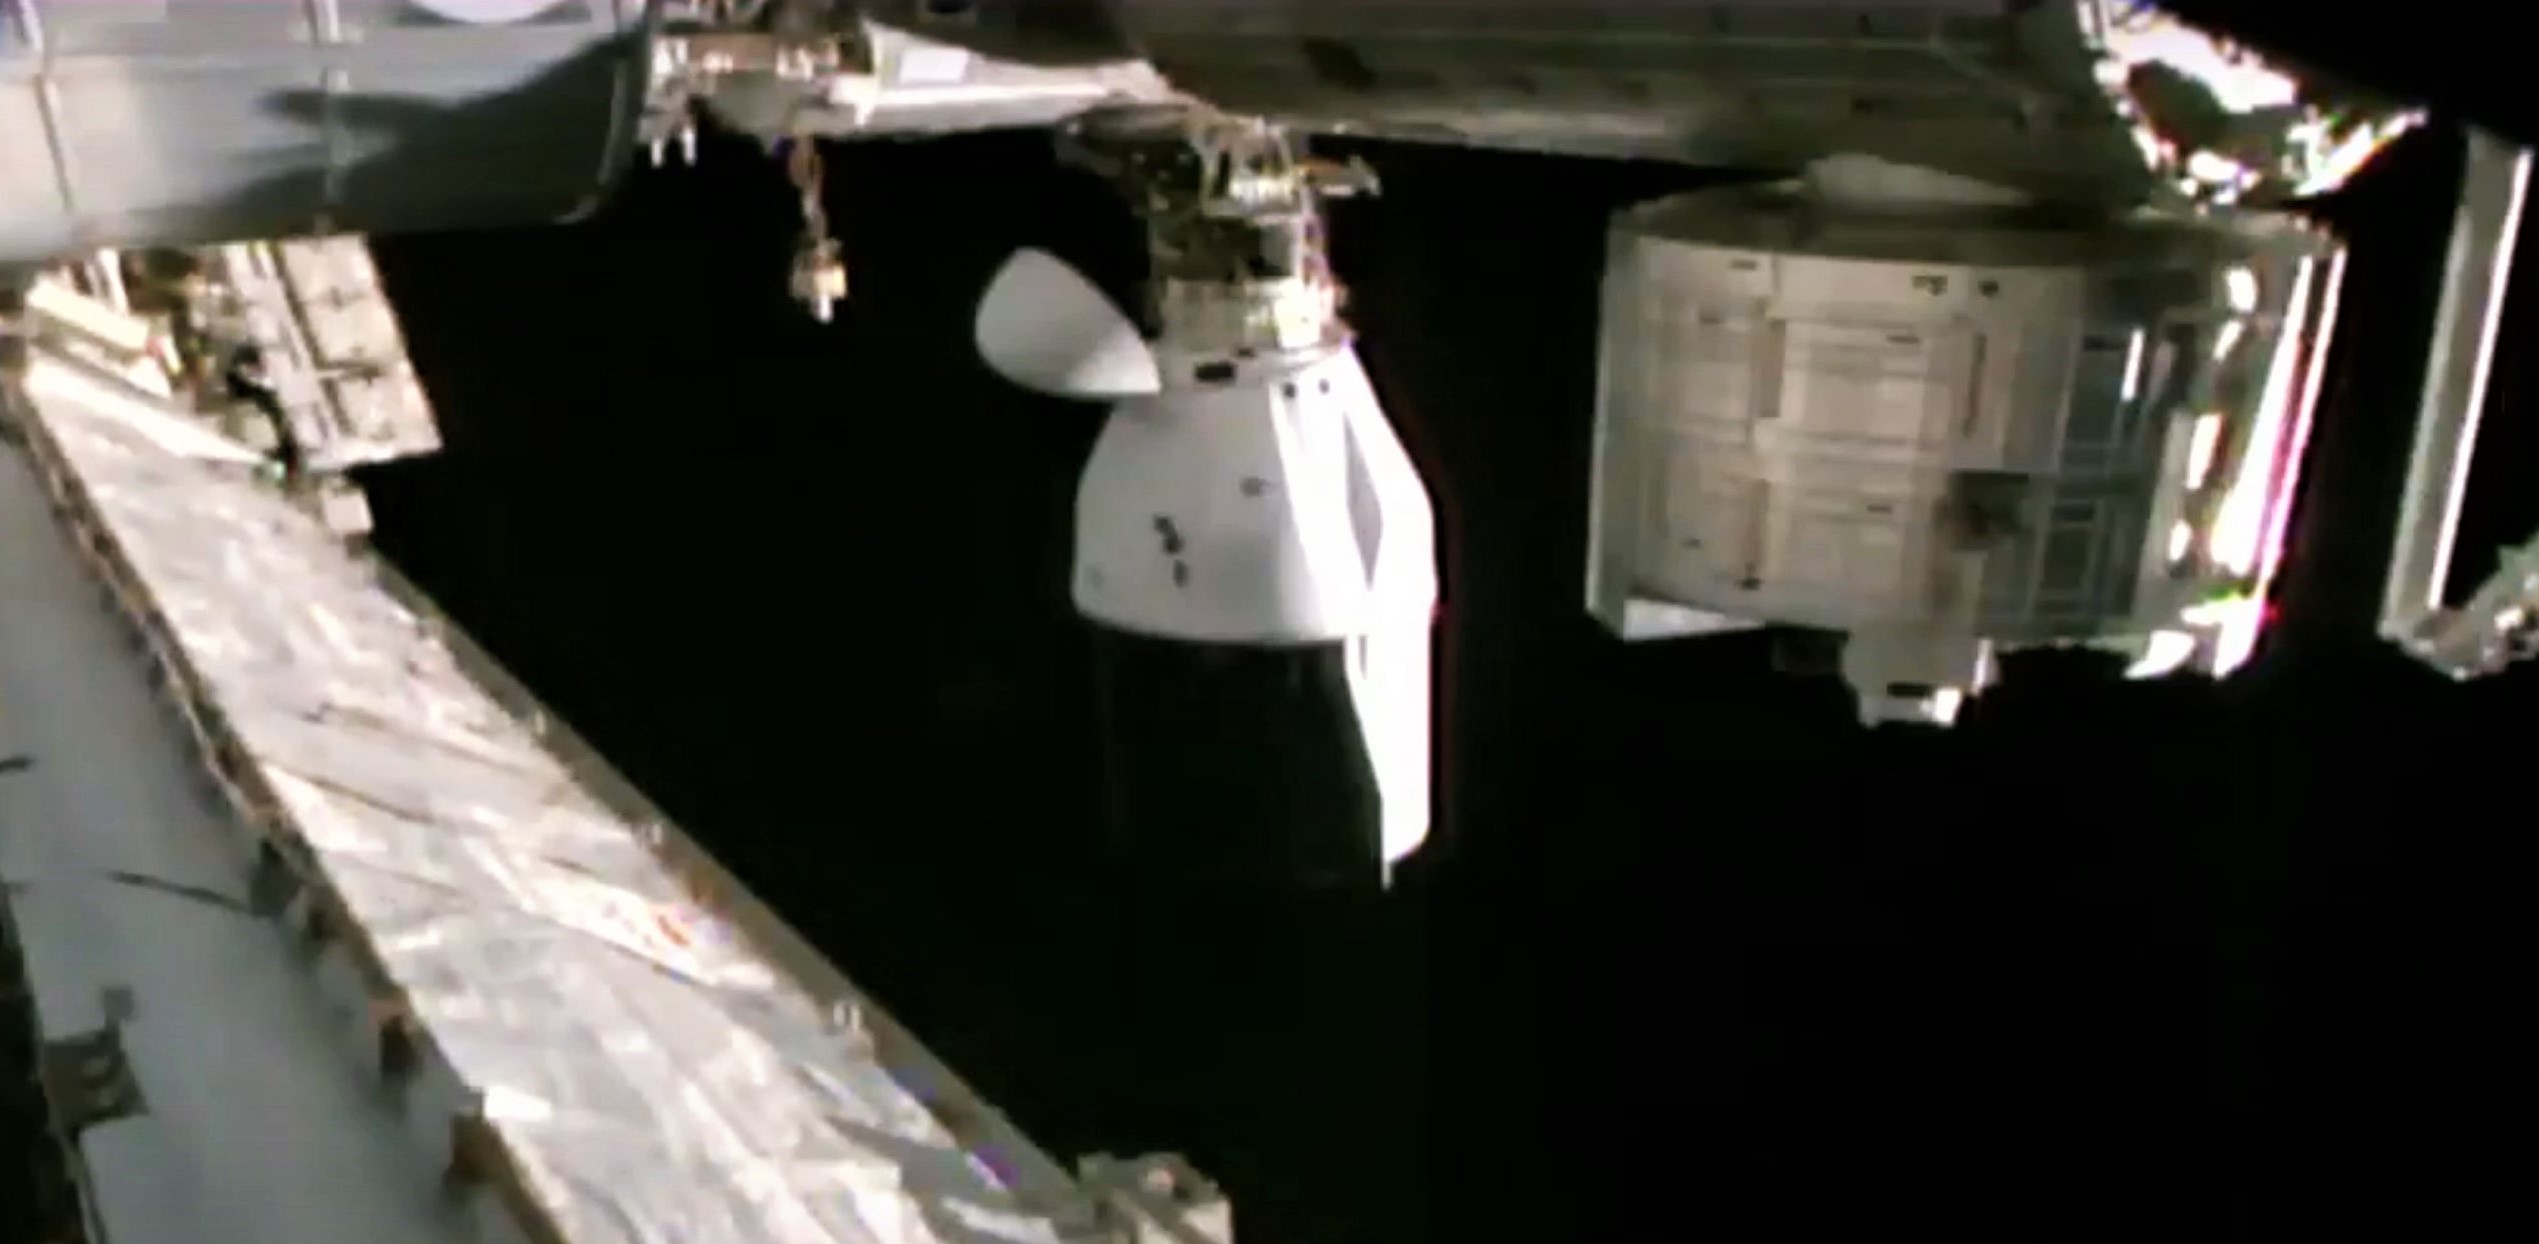 CRS-21 Cargo Dragon 2 C208 011121 (NASA) ISS departure abort 2